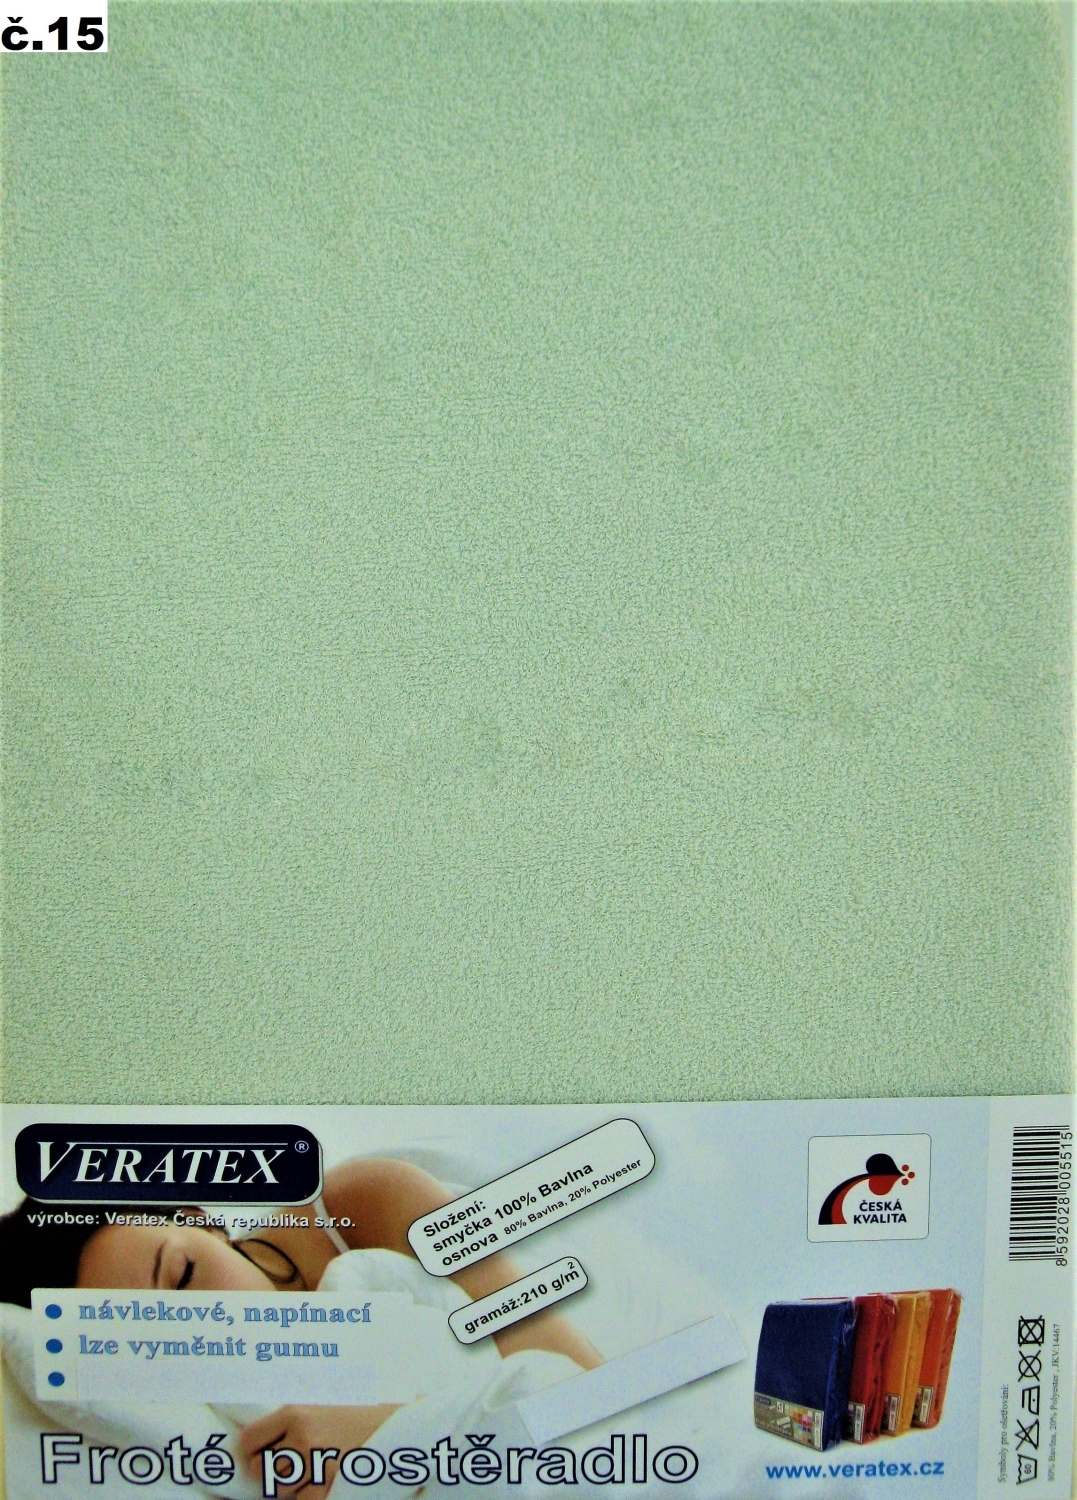 Veratex Froté prostěradlo 80 x 160 cm (č.15 sv.zelená) 80 x 160 cm